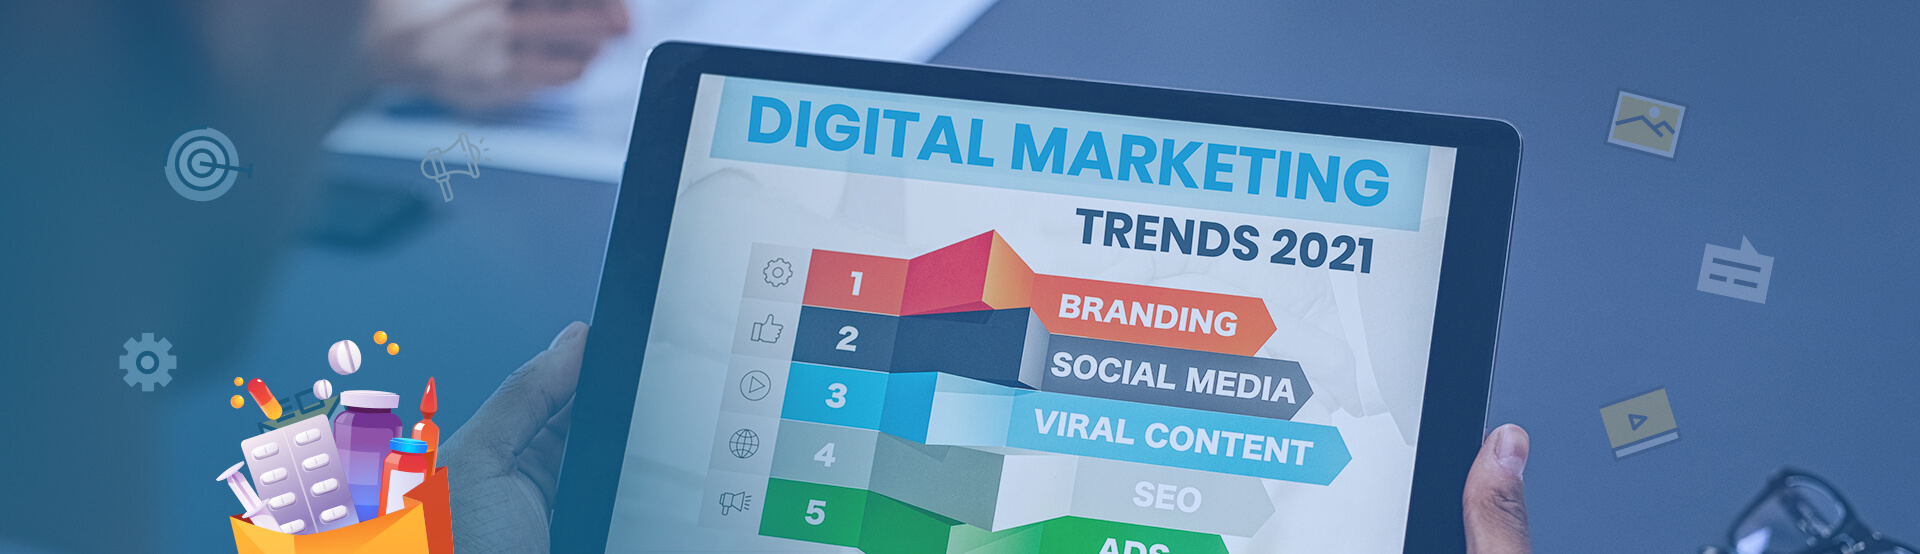 Top Digital Marketing Trends 2021 - Luma Creative - San Francisco Bay Area  Video Production Company